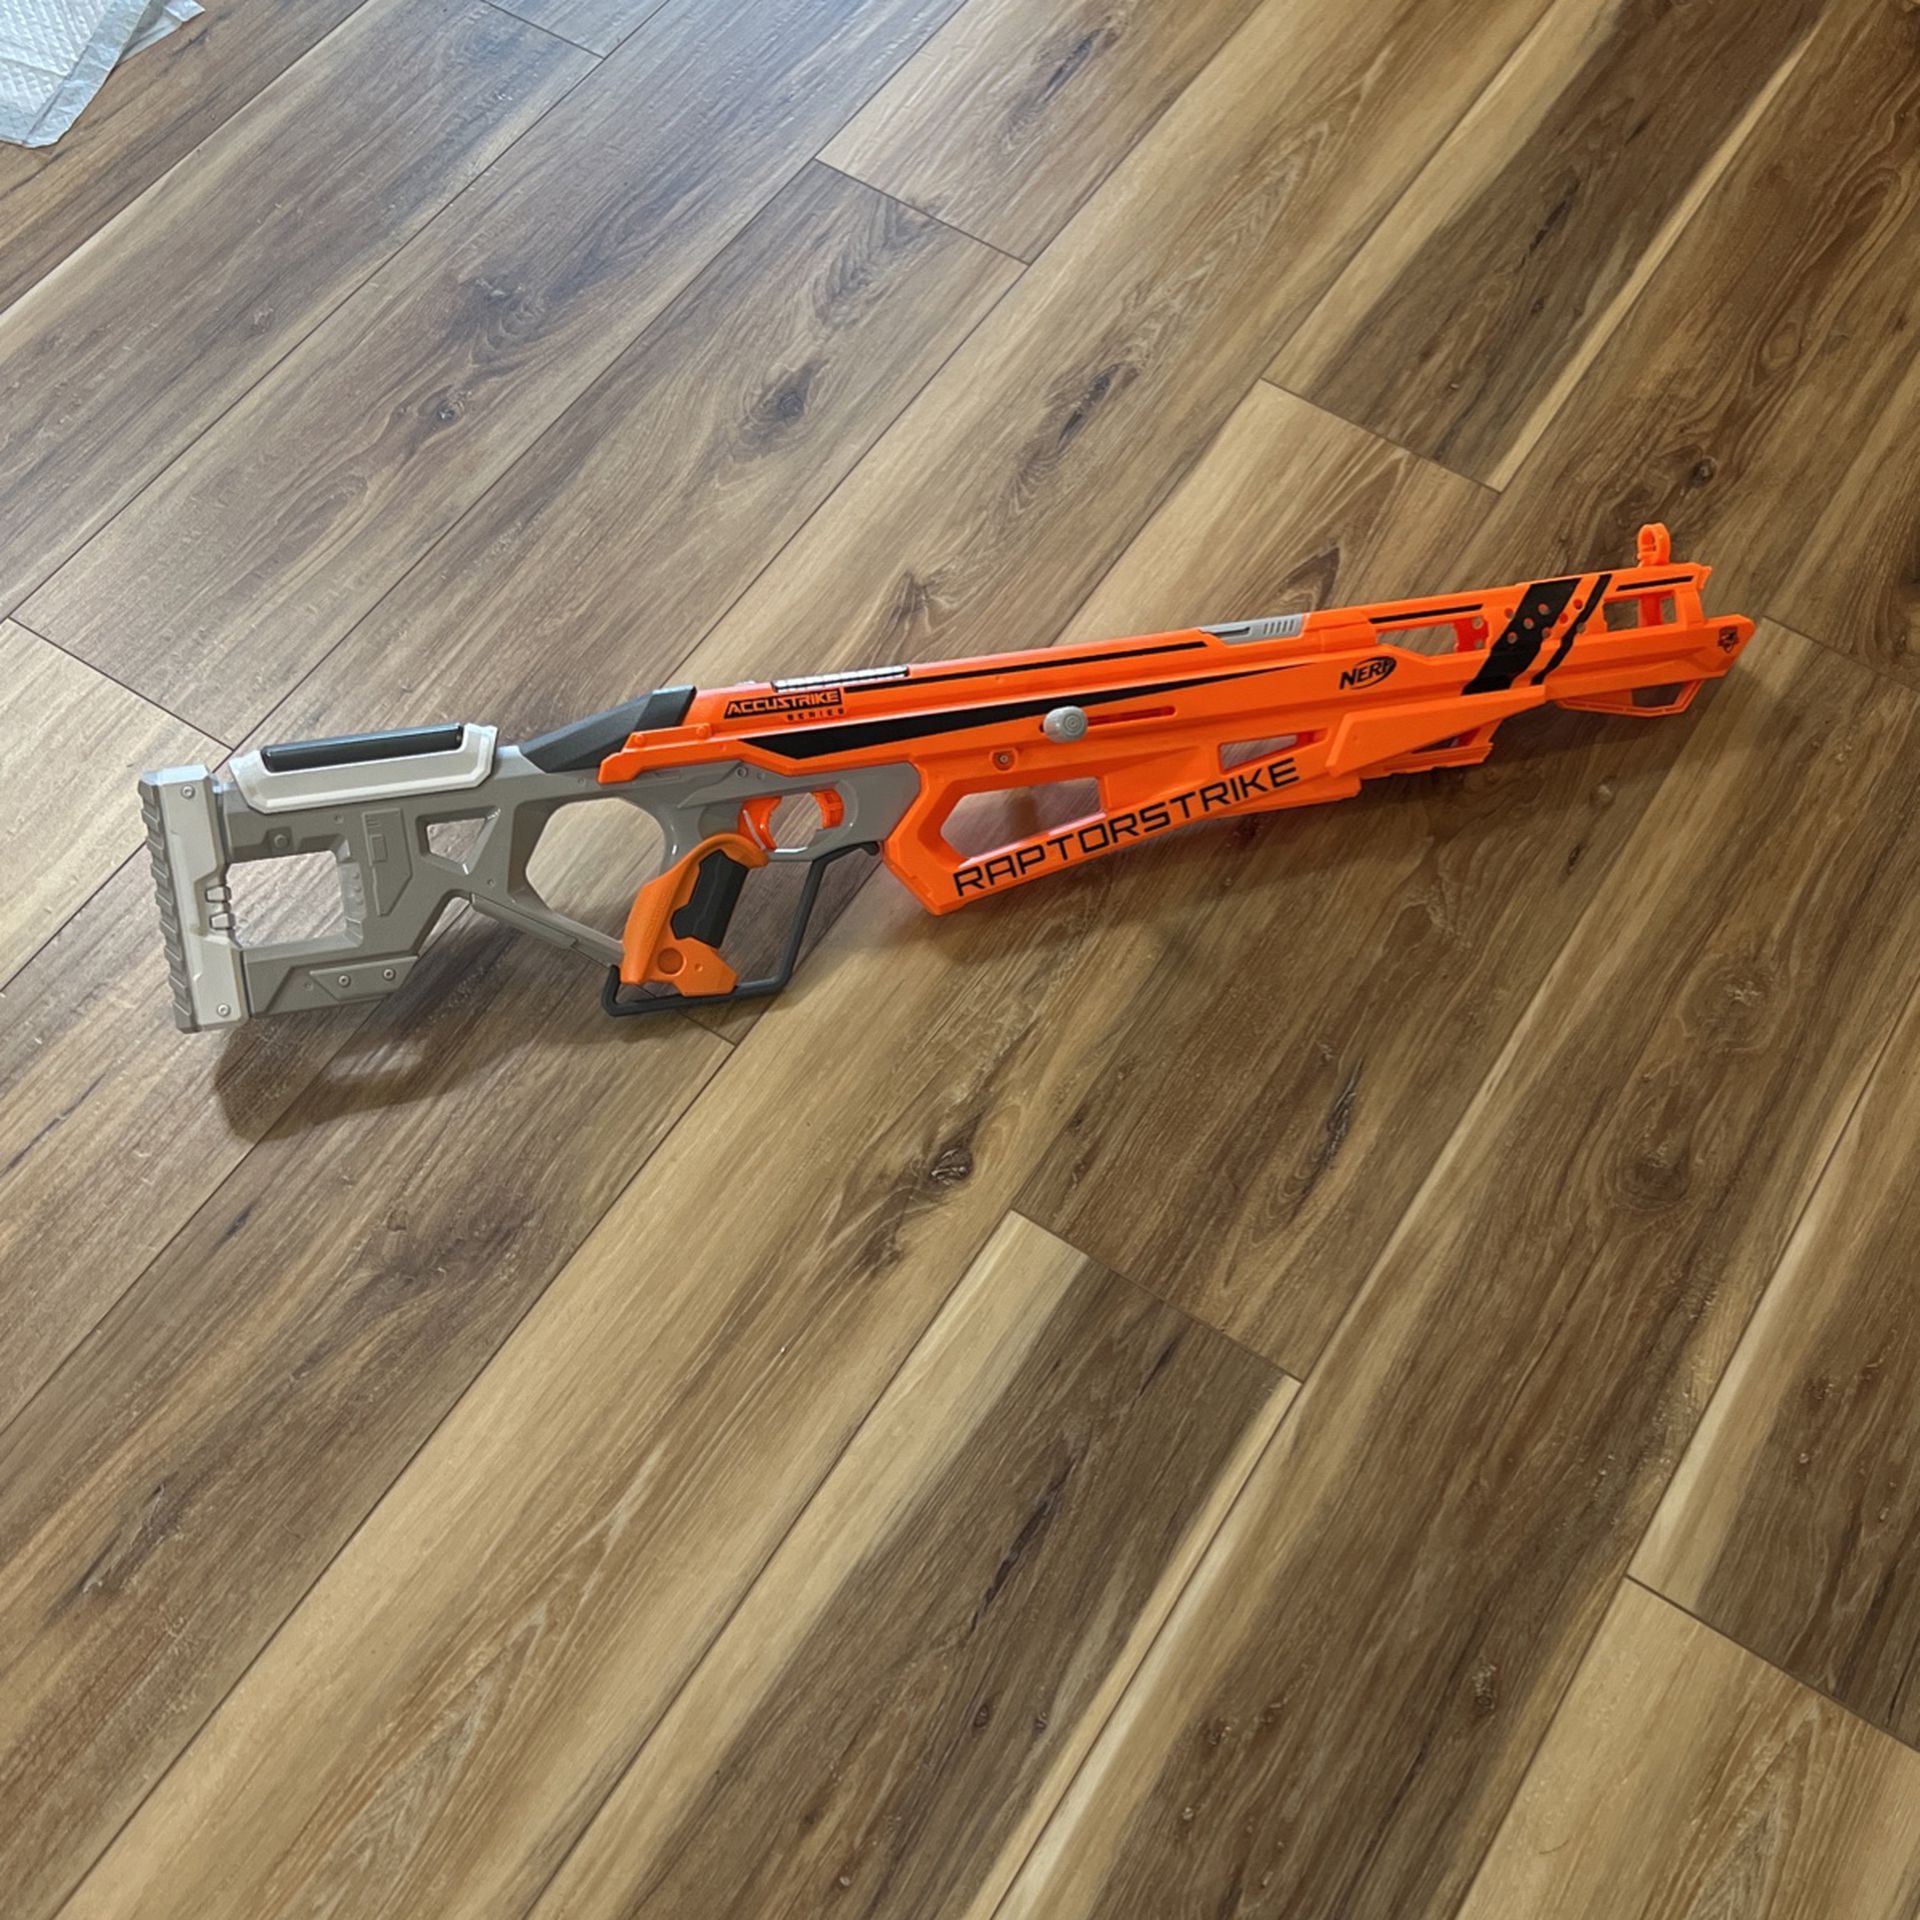 Nerf Accustrike Raptorstrike Gun